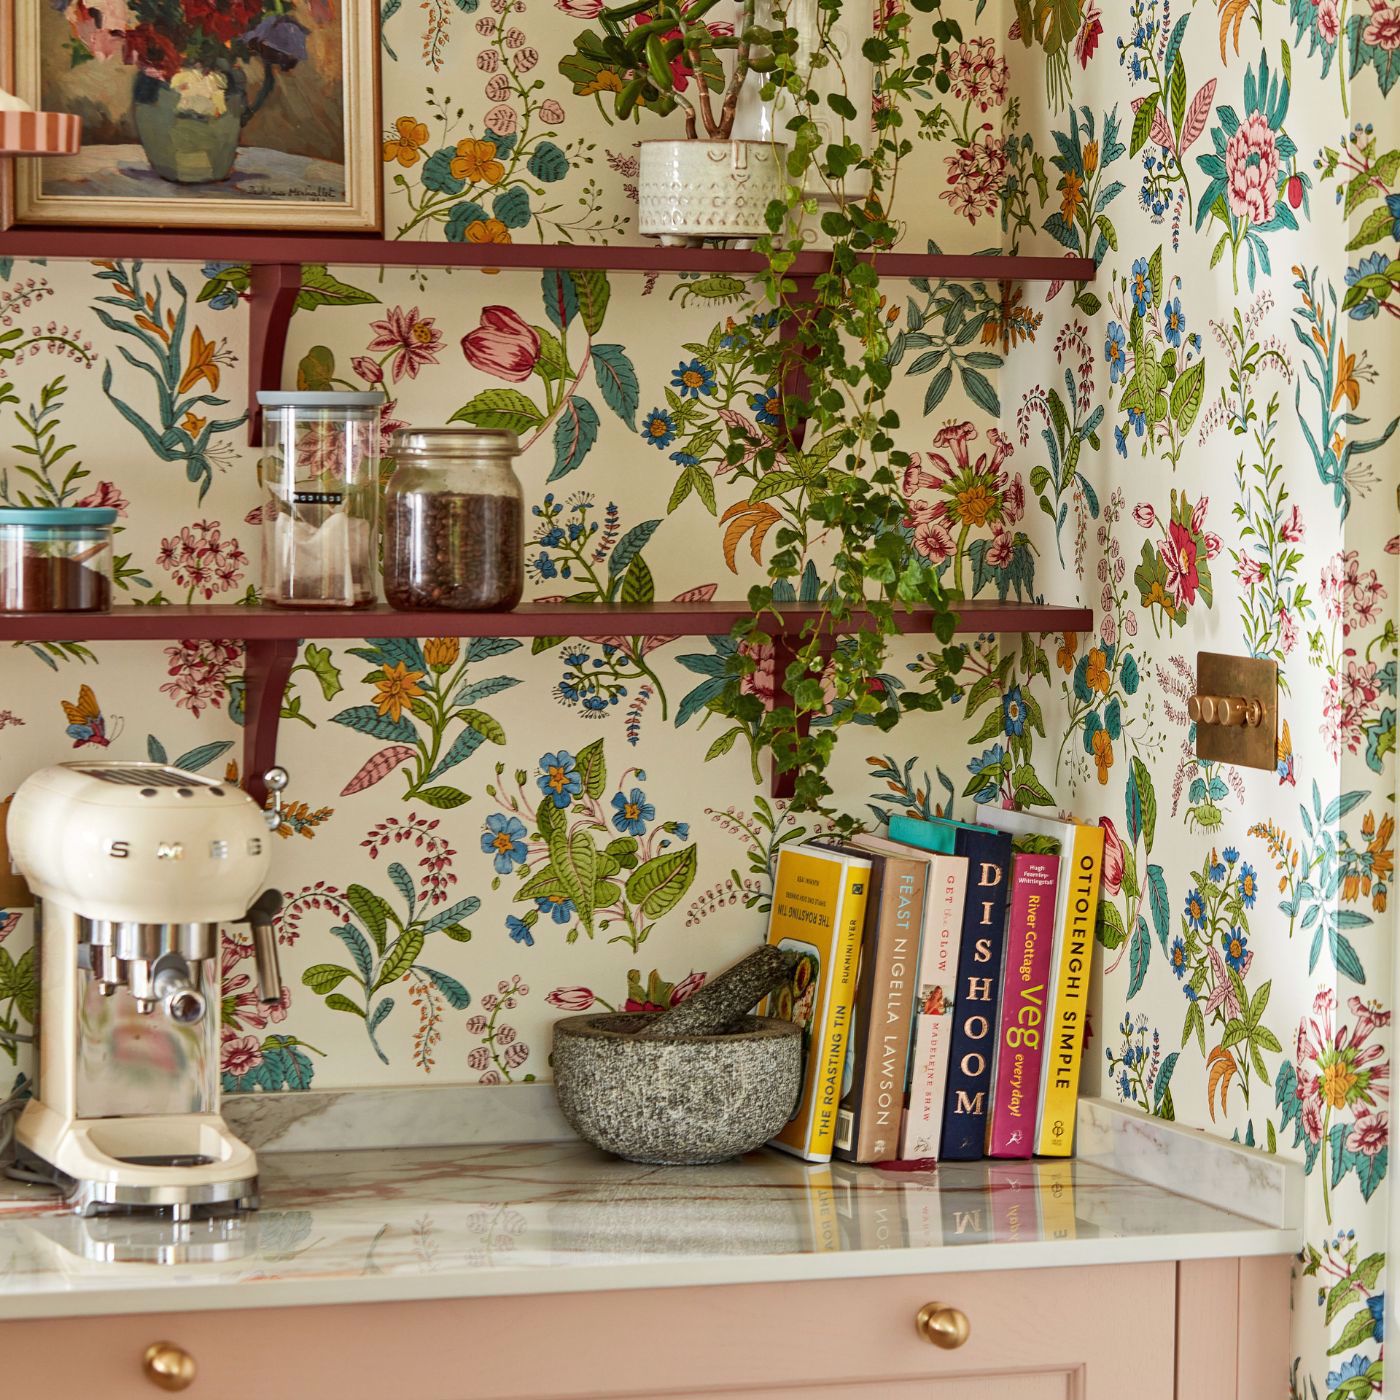 Woodland Floral Jade/Malachite/Rose Quartz Wallpaper by HAR